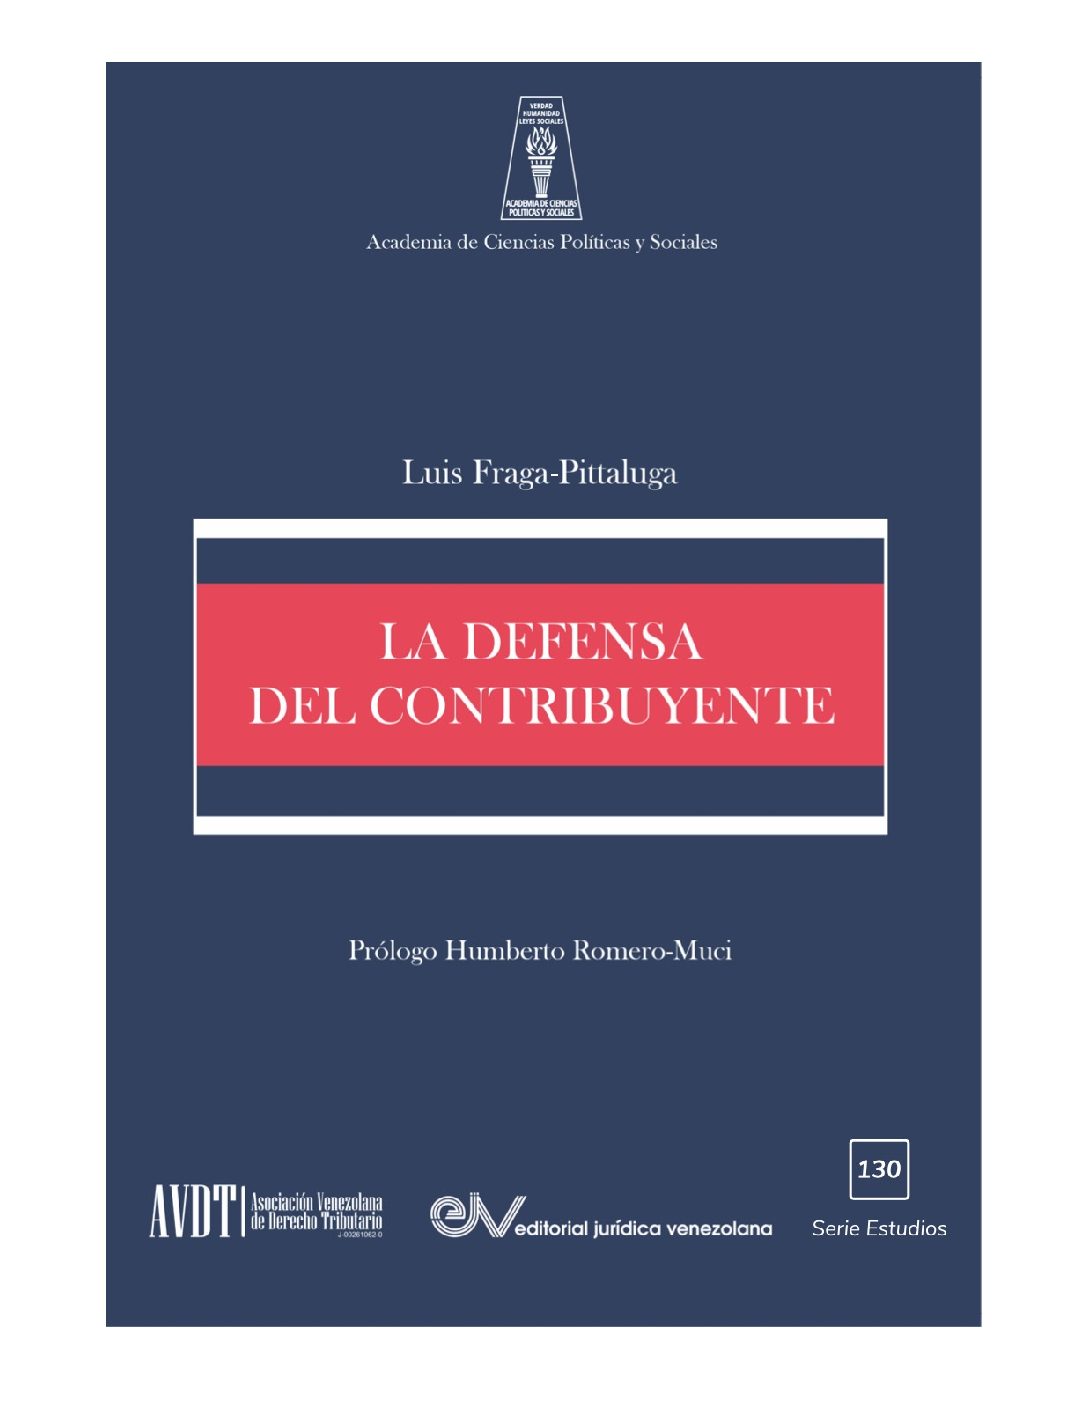 Apoyo institucional a la obra del Dr. Luis Fraga-Pittaluga intitulada “La defensa del contribuyente»